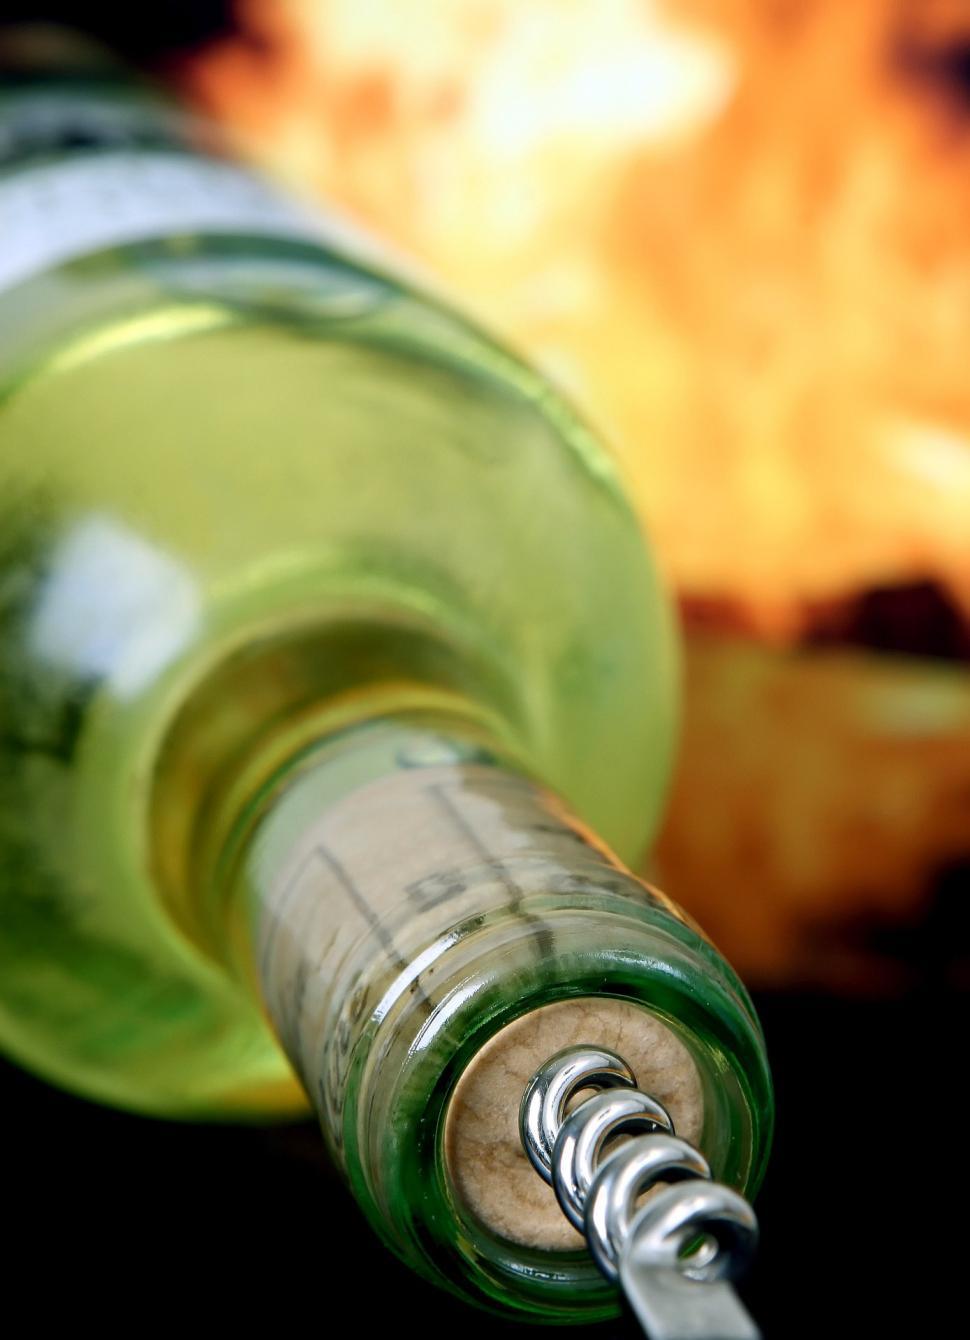 Free Image of corkscrew wine bottle cork 